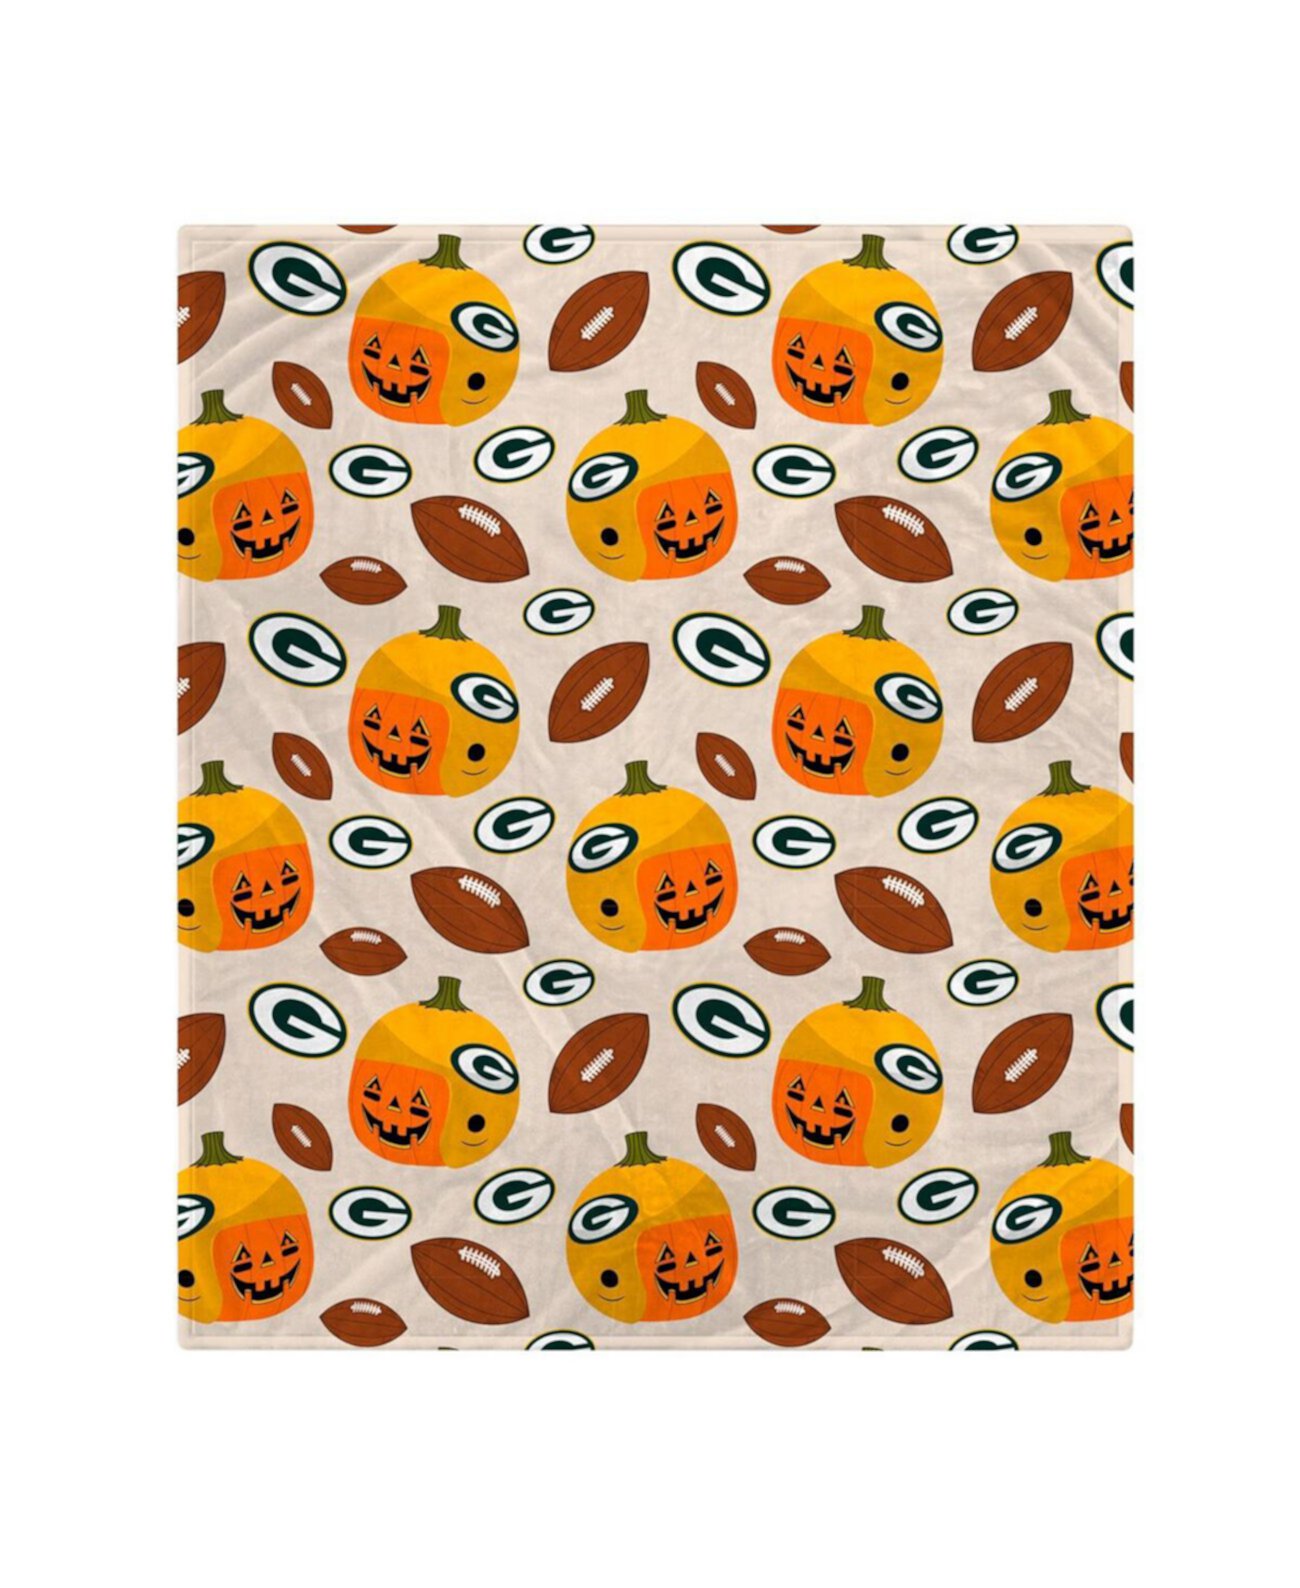 Флисовое одеяло Corral Green Bay Packers размером 60 x 70 дюймов с тыквенным шлемом Pegasus Home Fashions